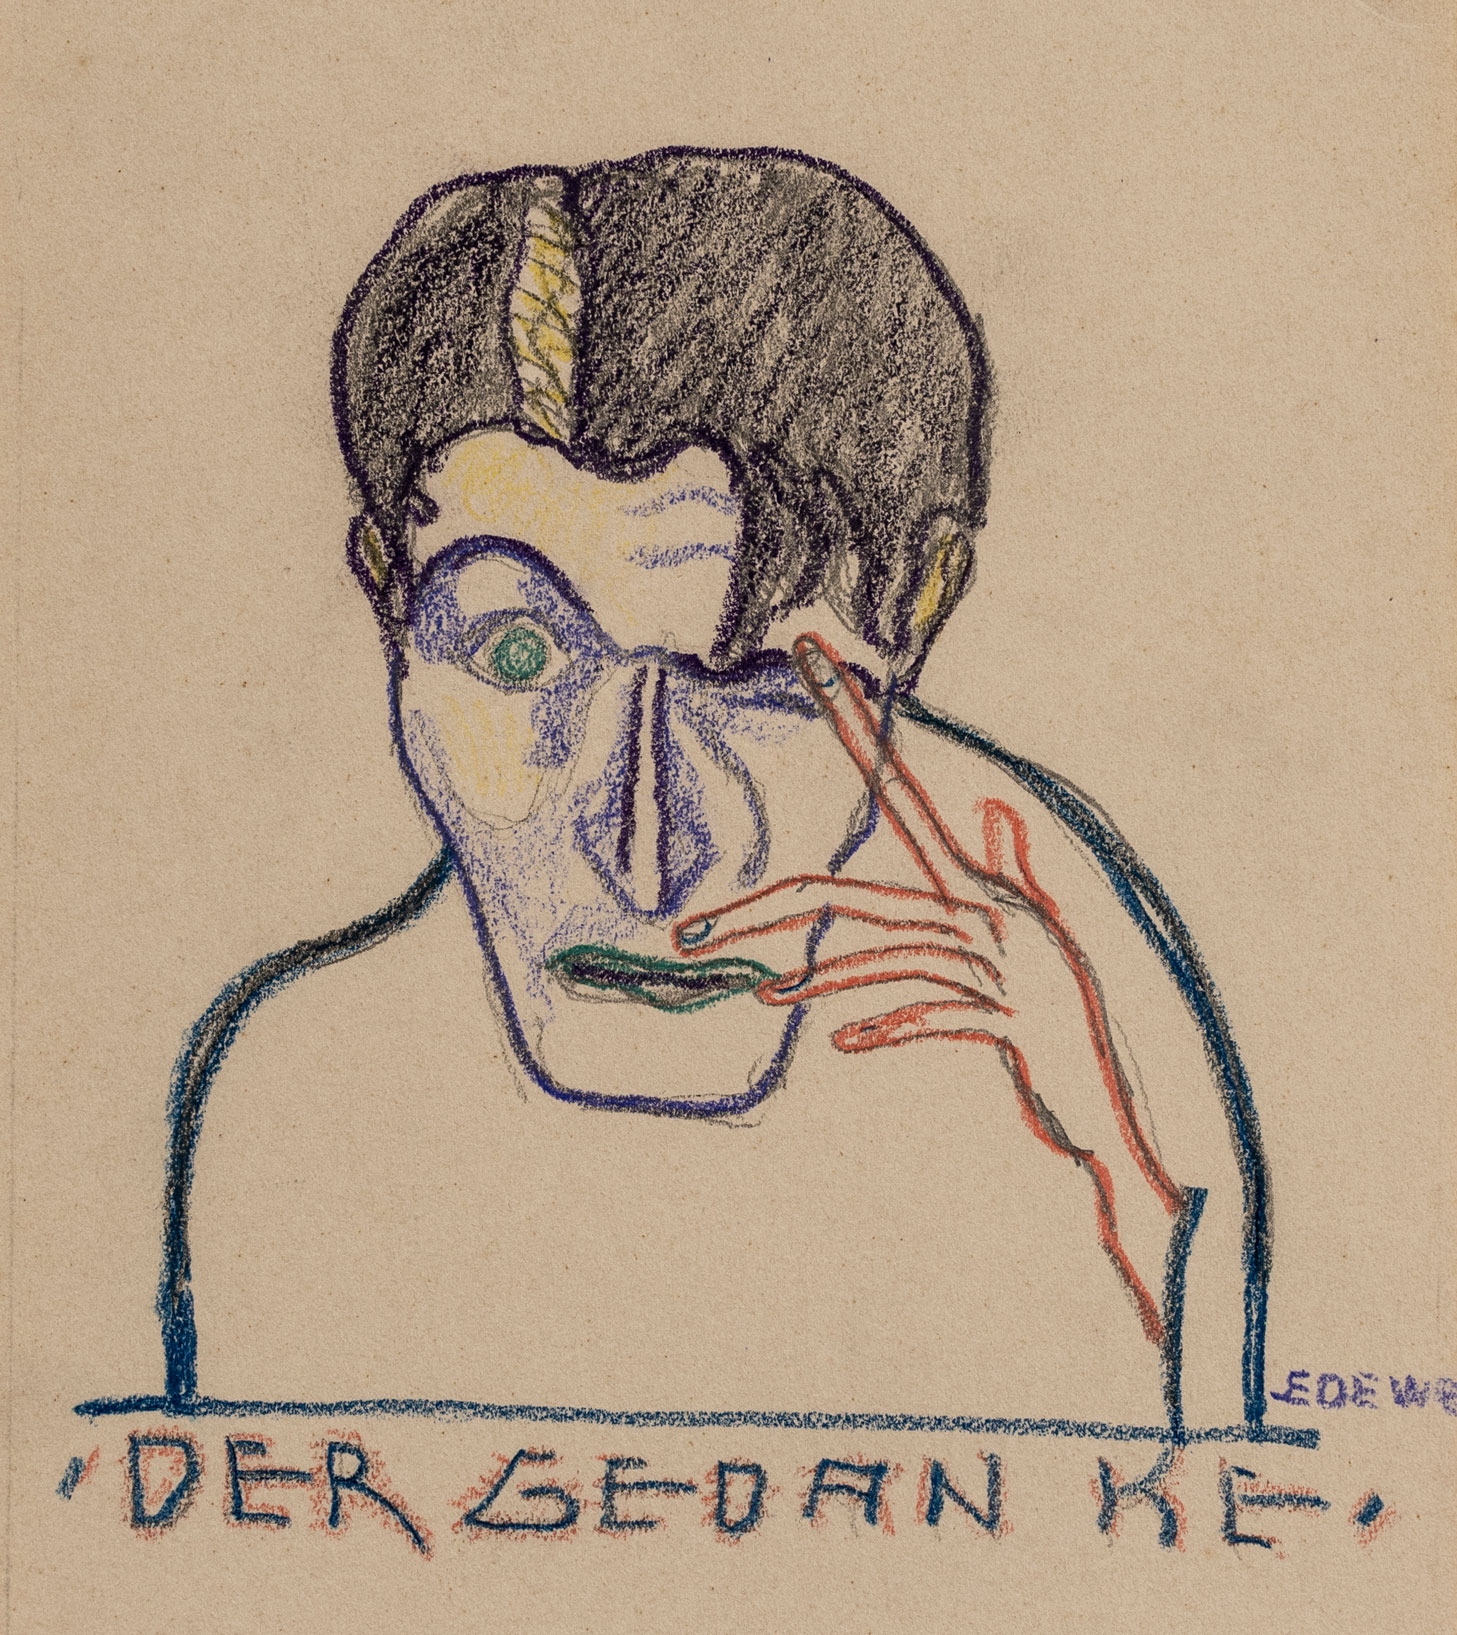 ERICH WEGNER (1899 Gnoien – 1980 Hannover)